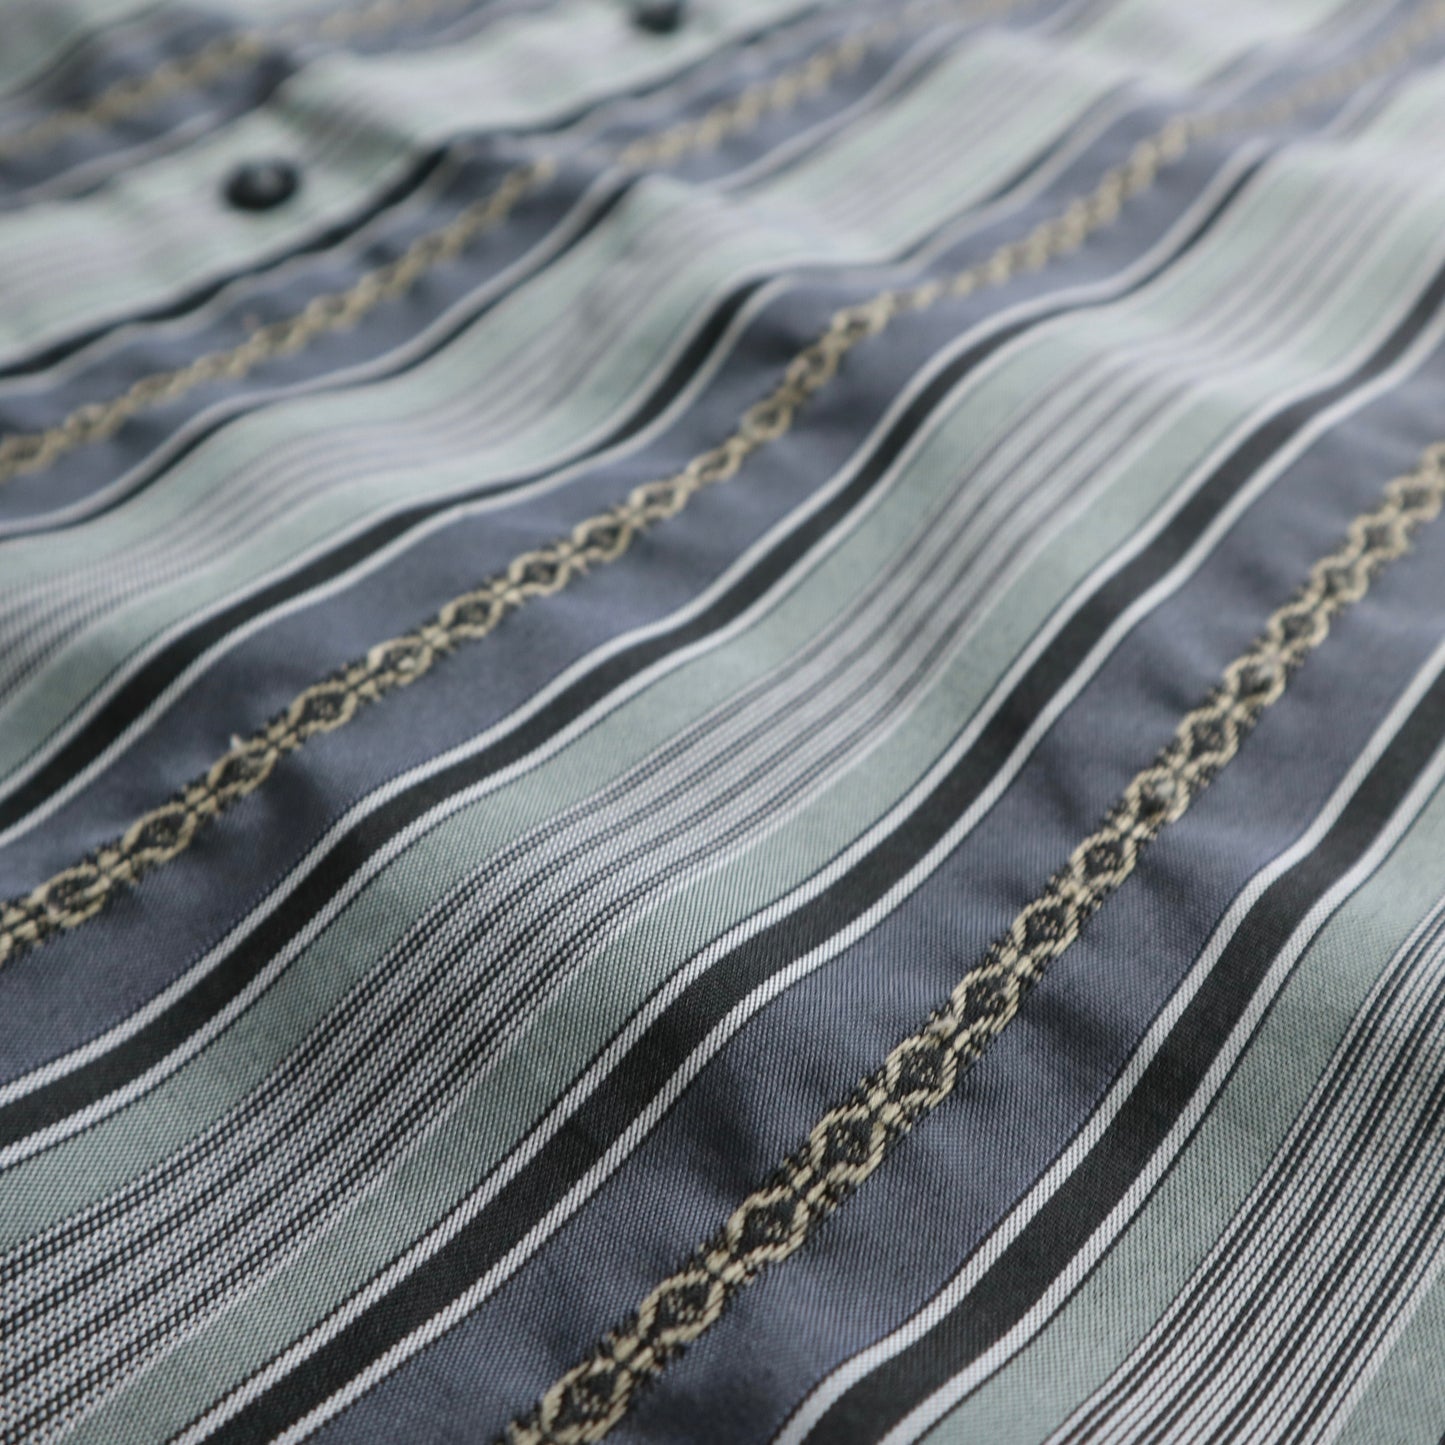 Classic gray striped long-sleeved shirt